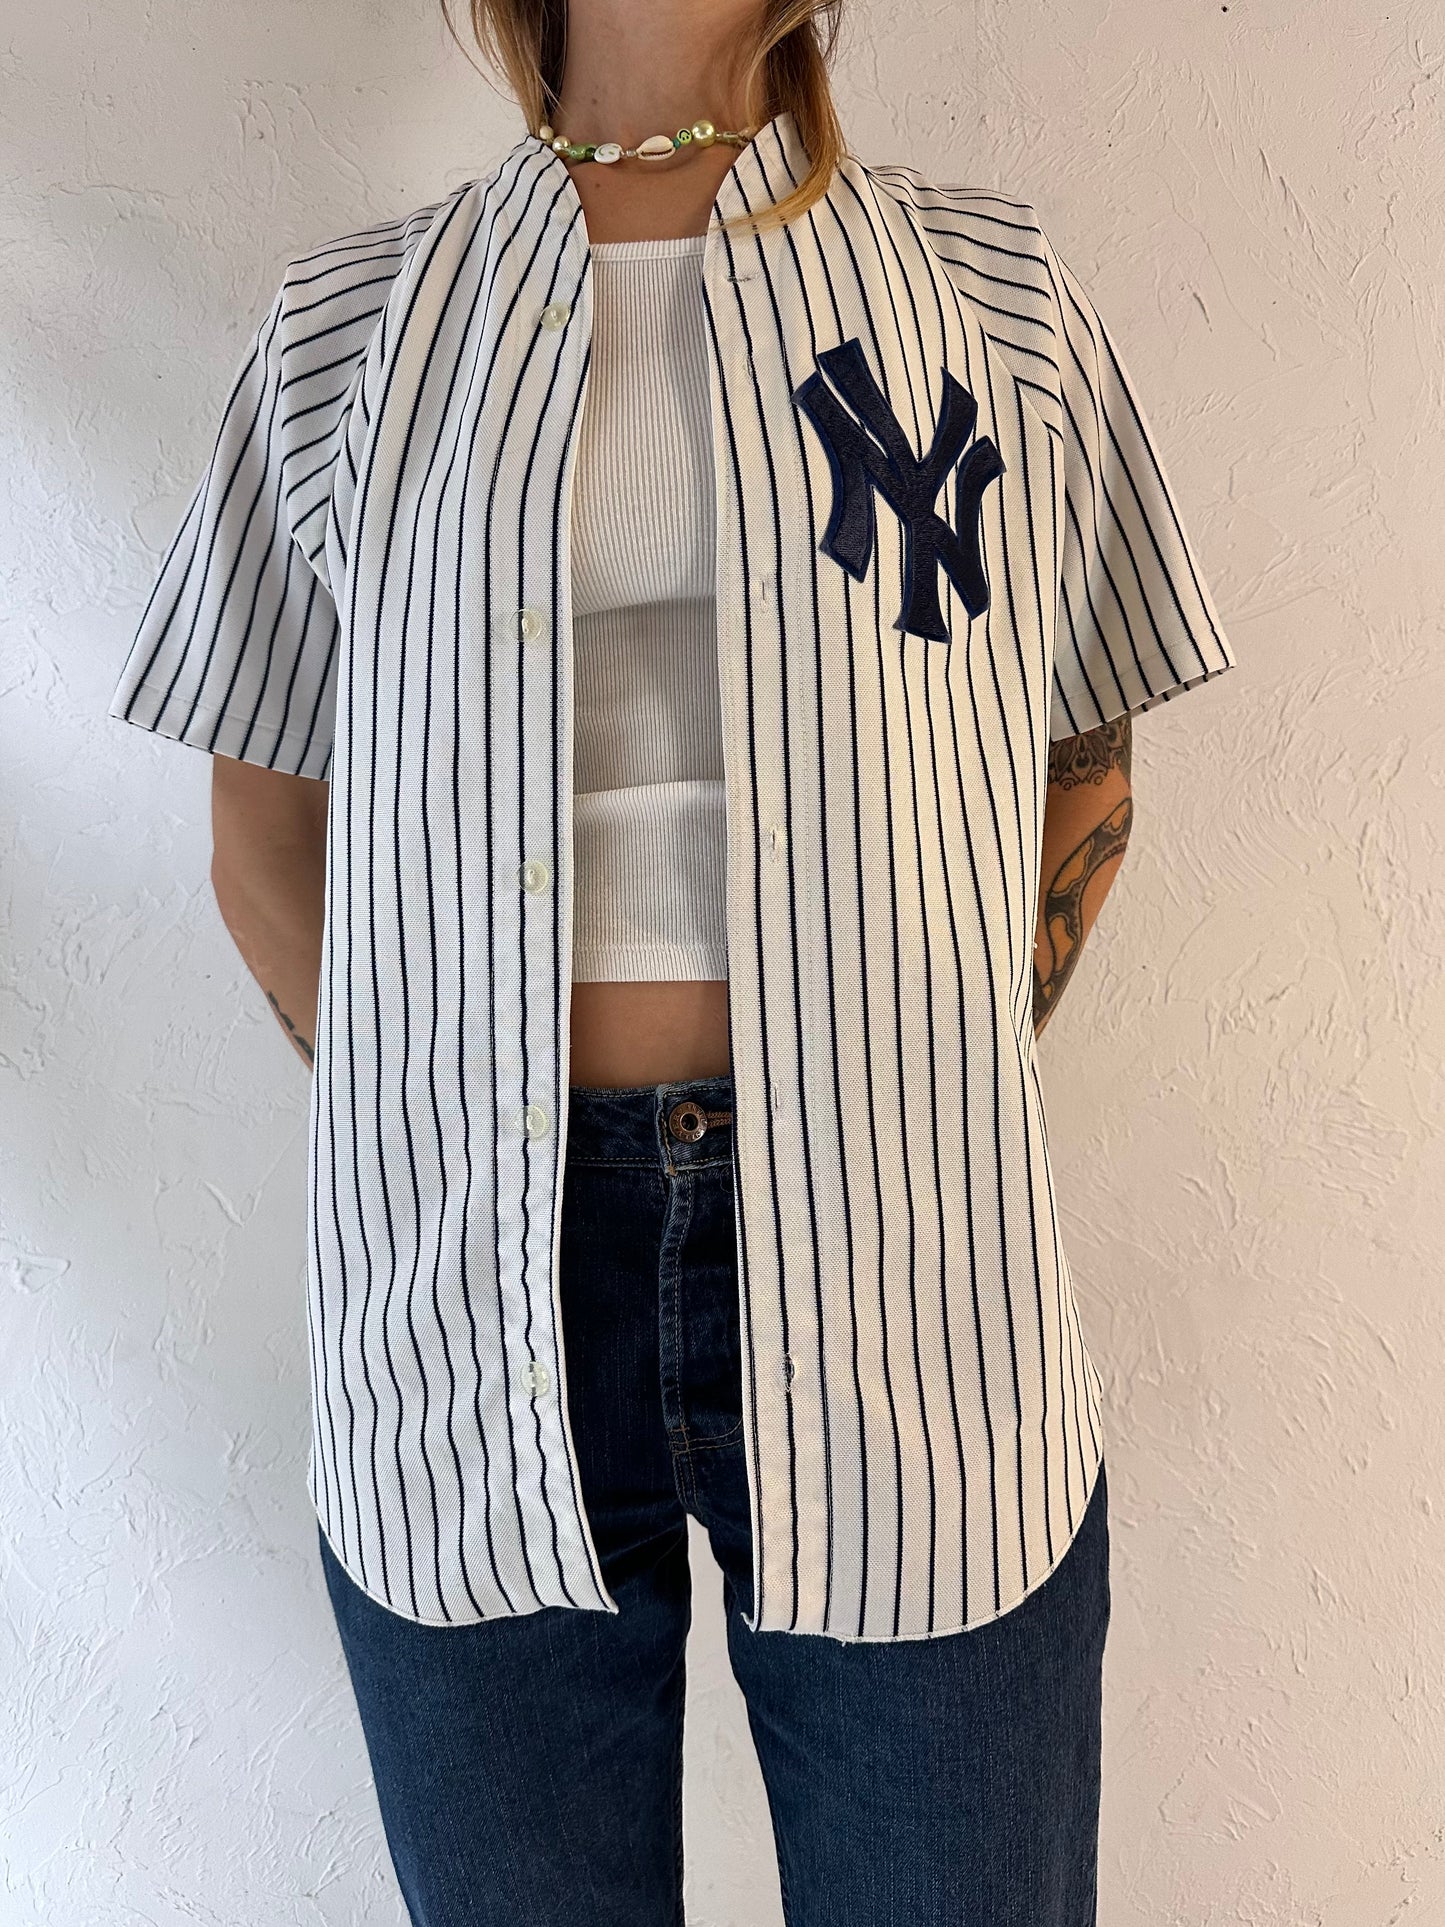 Vintage 'NY Yankees' Baseball Shirt / Medium